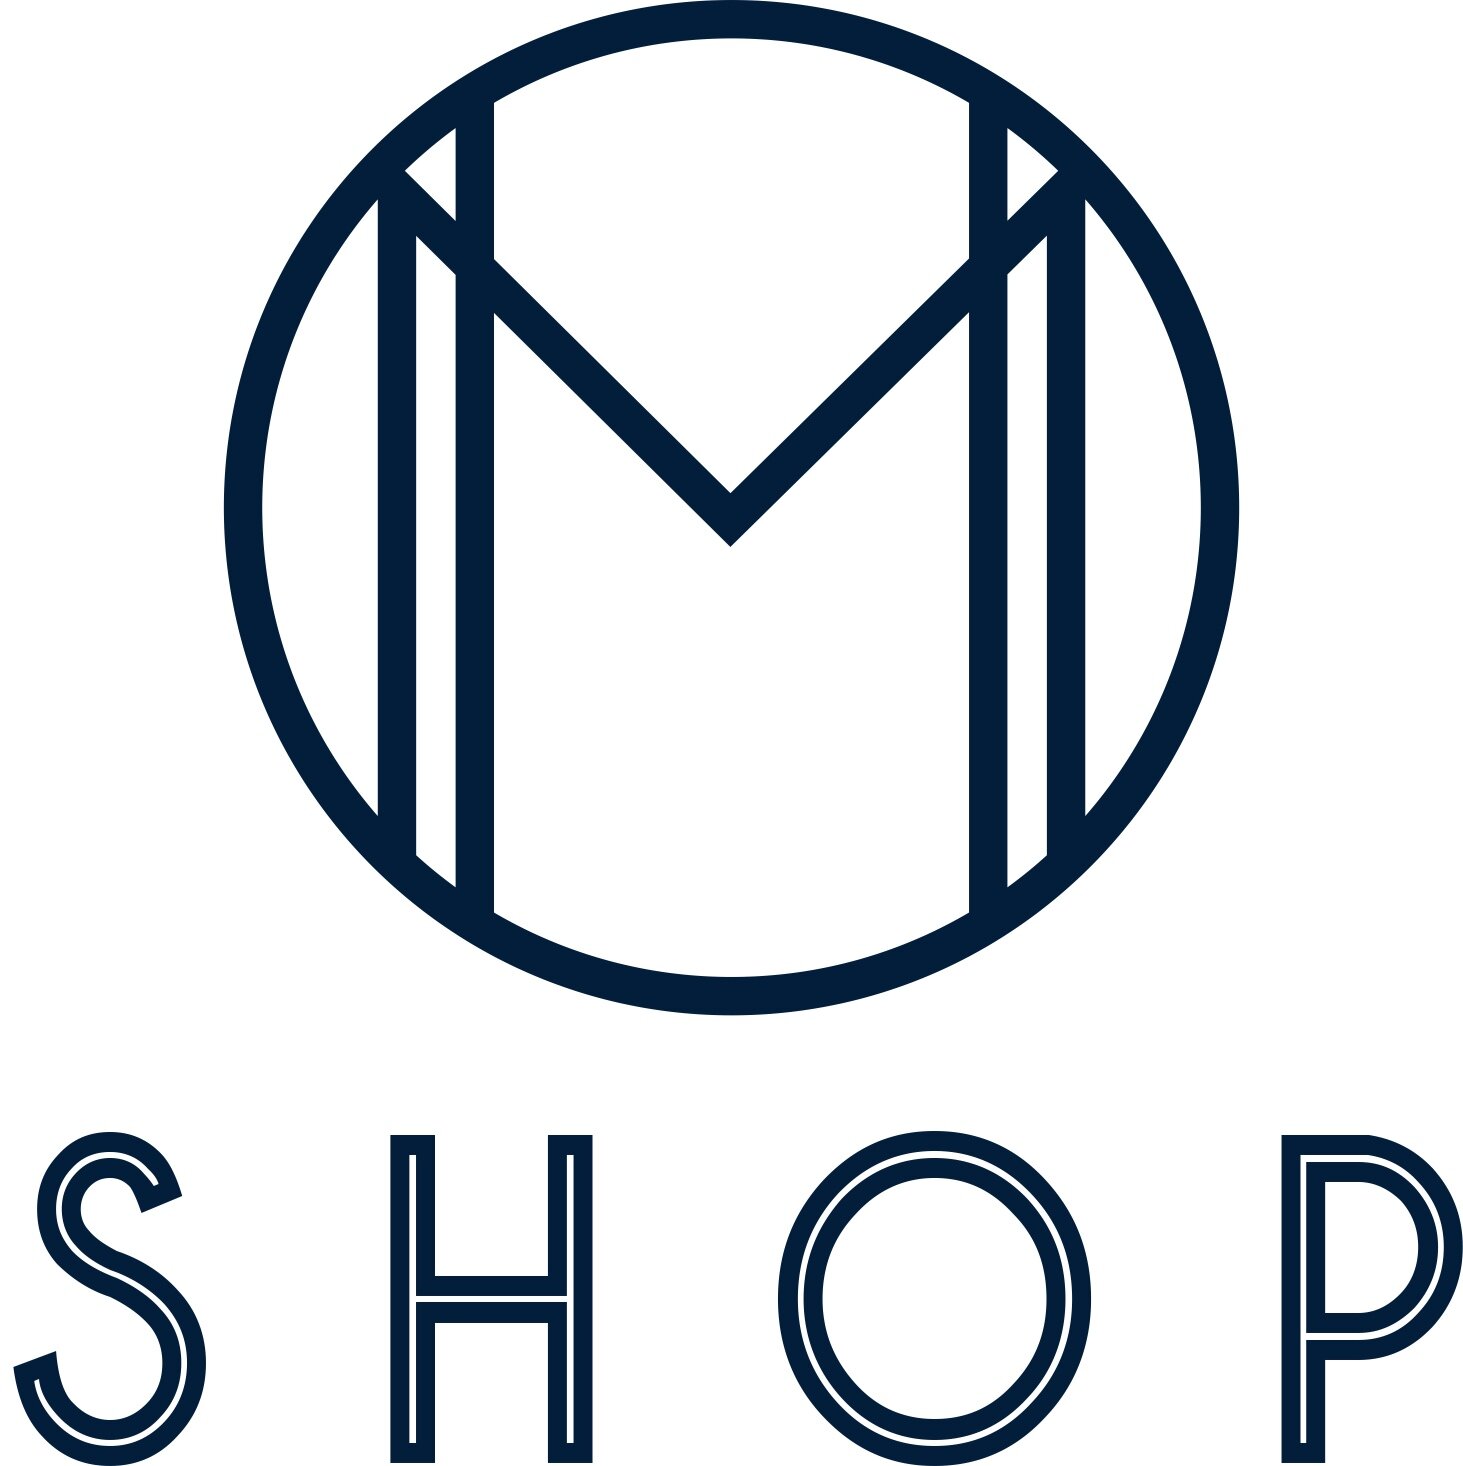 M SHOP - START YOUR FASHION COMPANY® GLOBALLY